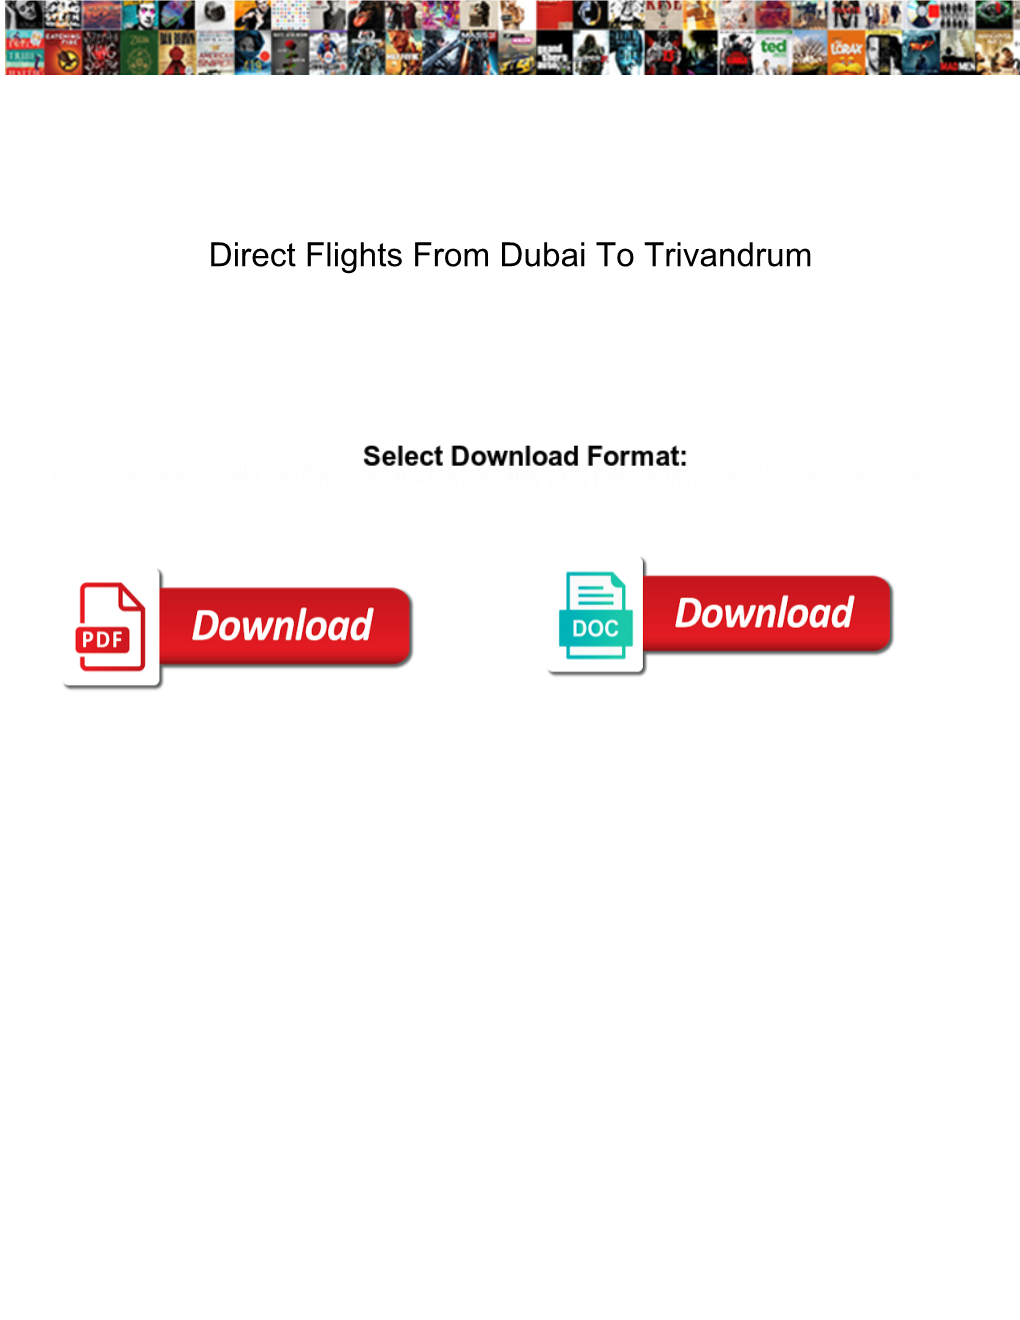 Direct Flights from Dubai to Trivandrum